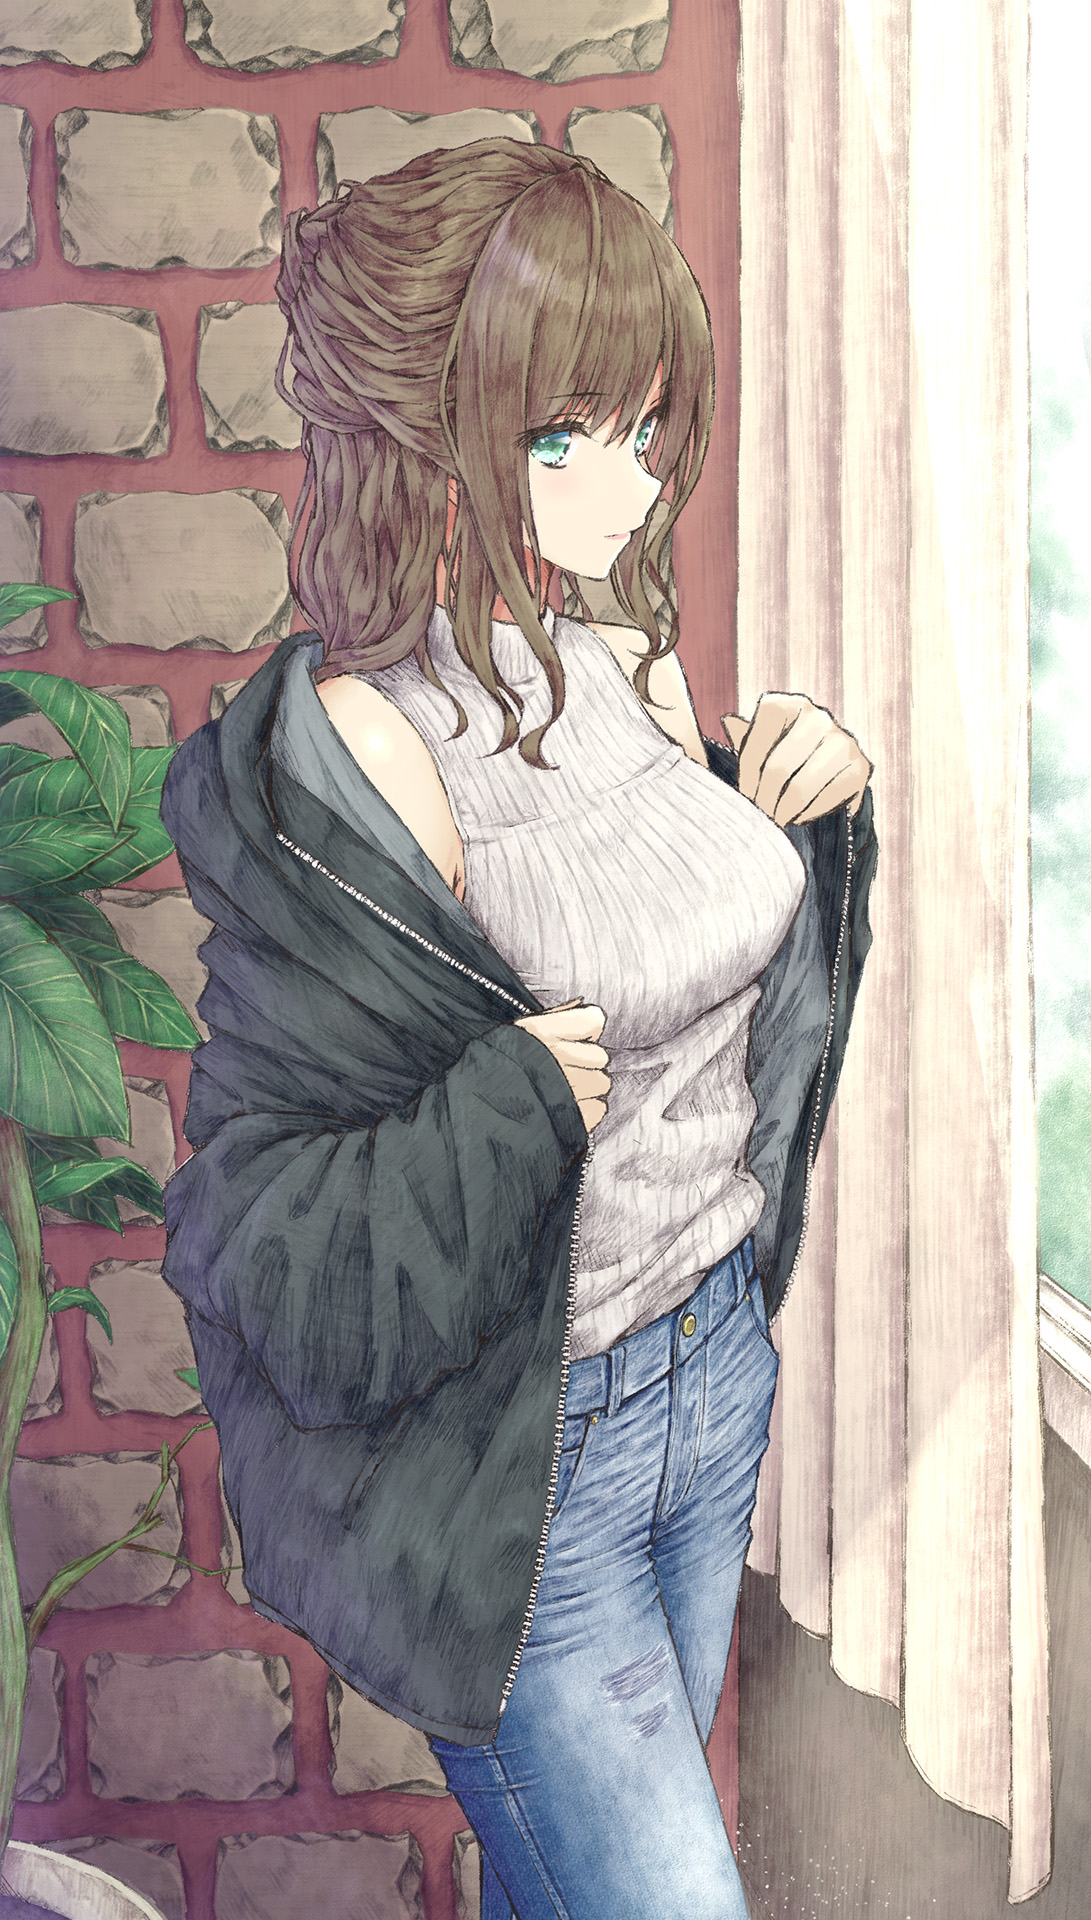 Anime 1091x1920 anime anime girls digital art artwork 2D portrait display Aramachi jeans sweater open jacket